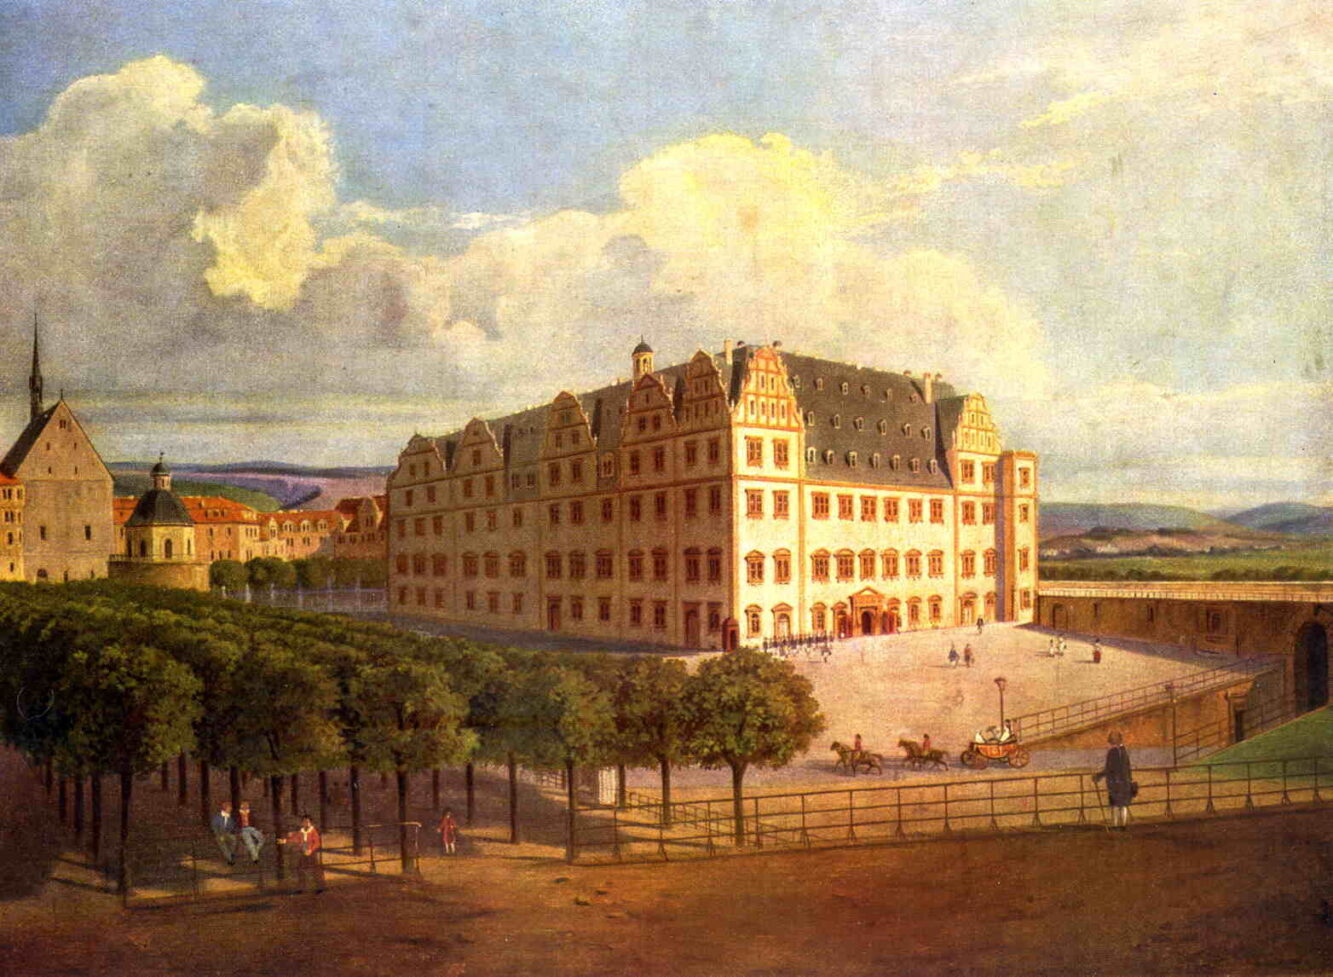 Das landgräfliche Residenzschloss zu Kassel | Unbekannt, um 1800 | © Wikimedia Commons